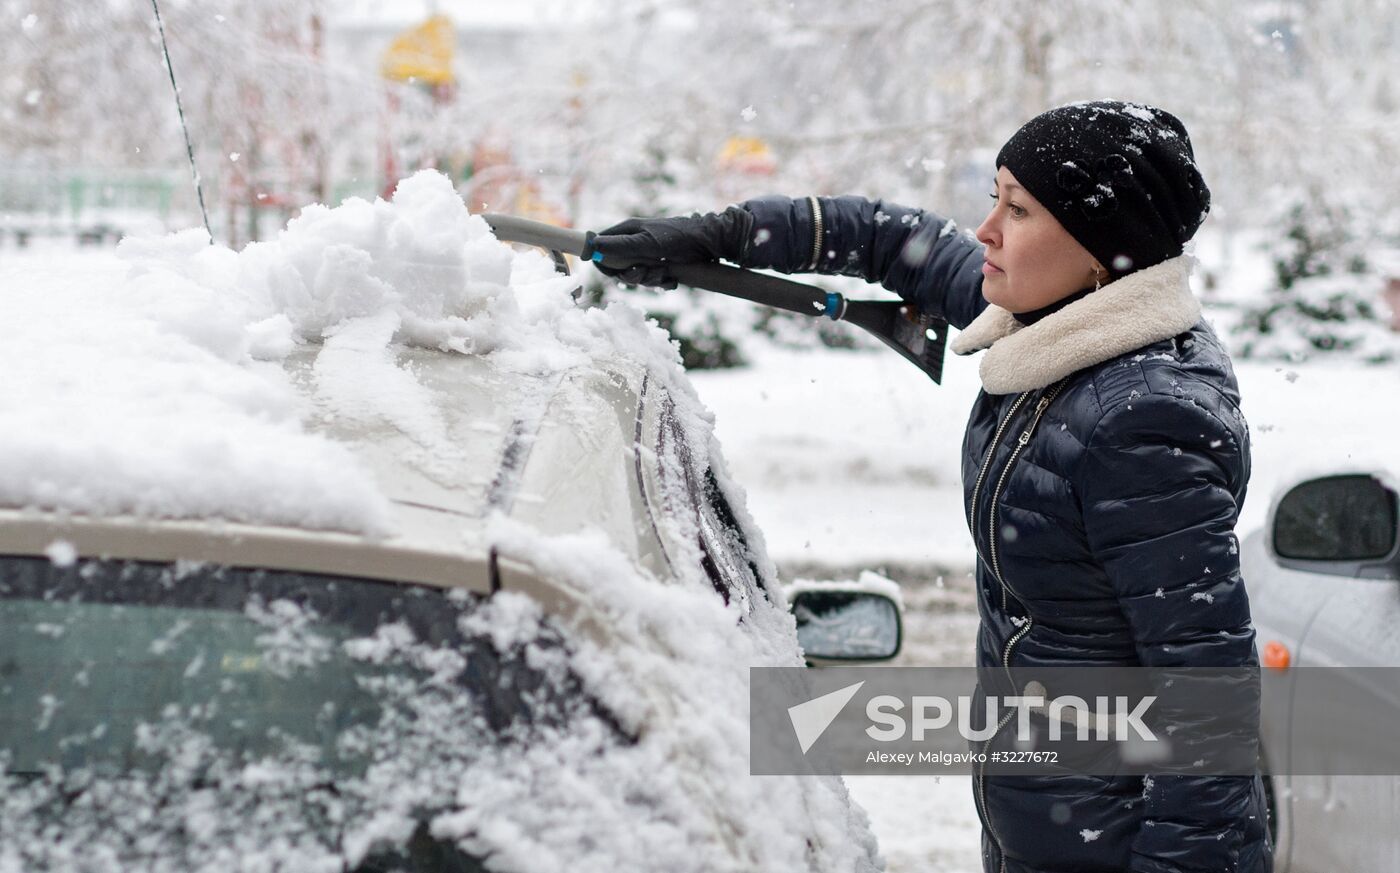 Snowfall in Omsk